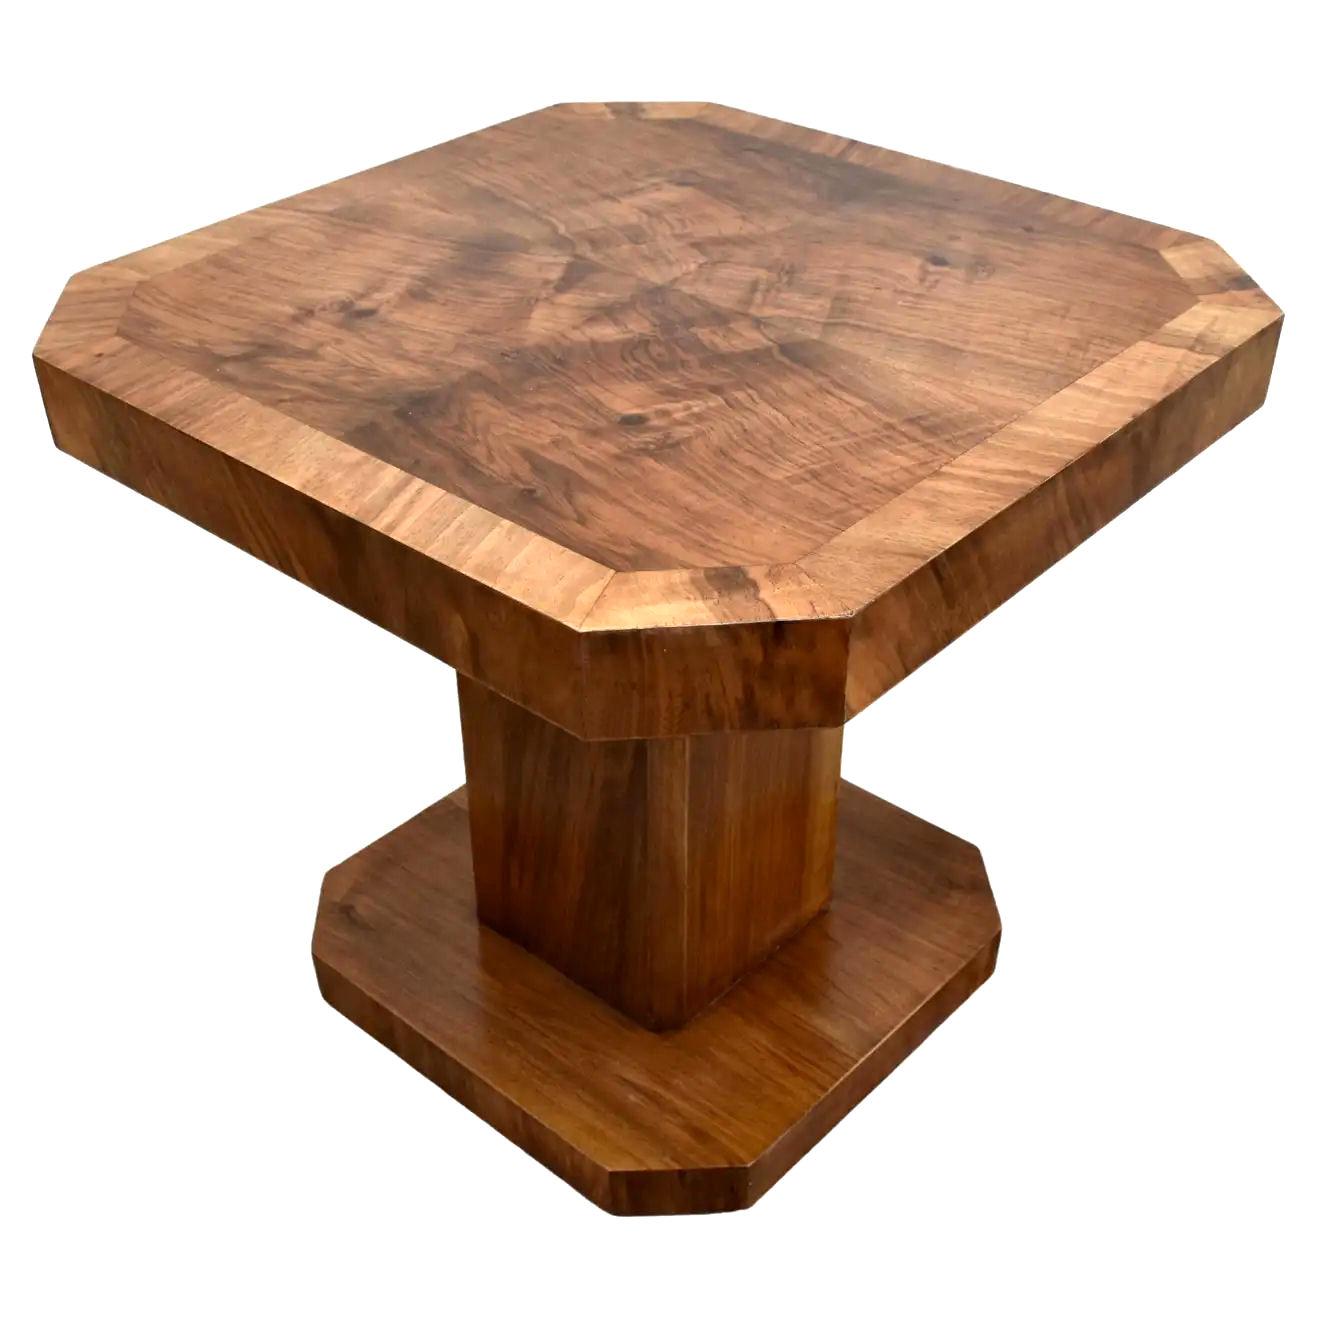 20th Century Art Deco Figured Walnut Coffee Table, c1930s, English For Sale